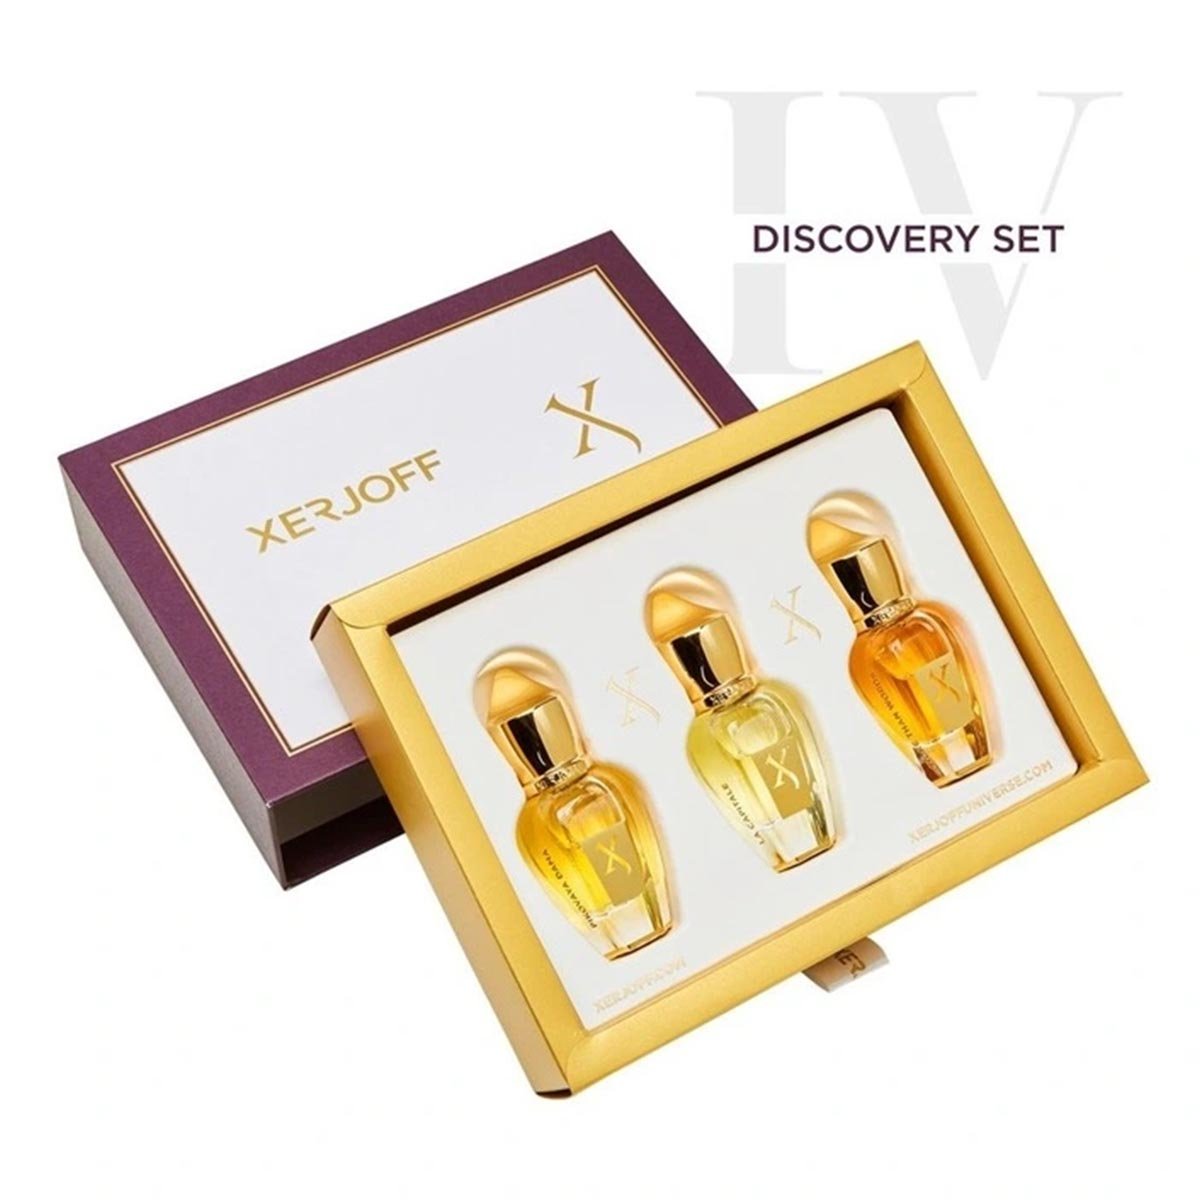 Xerjoff Discovery Set IV | My Perfume Shop Australia